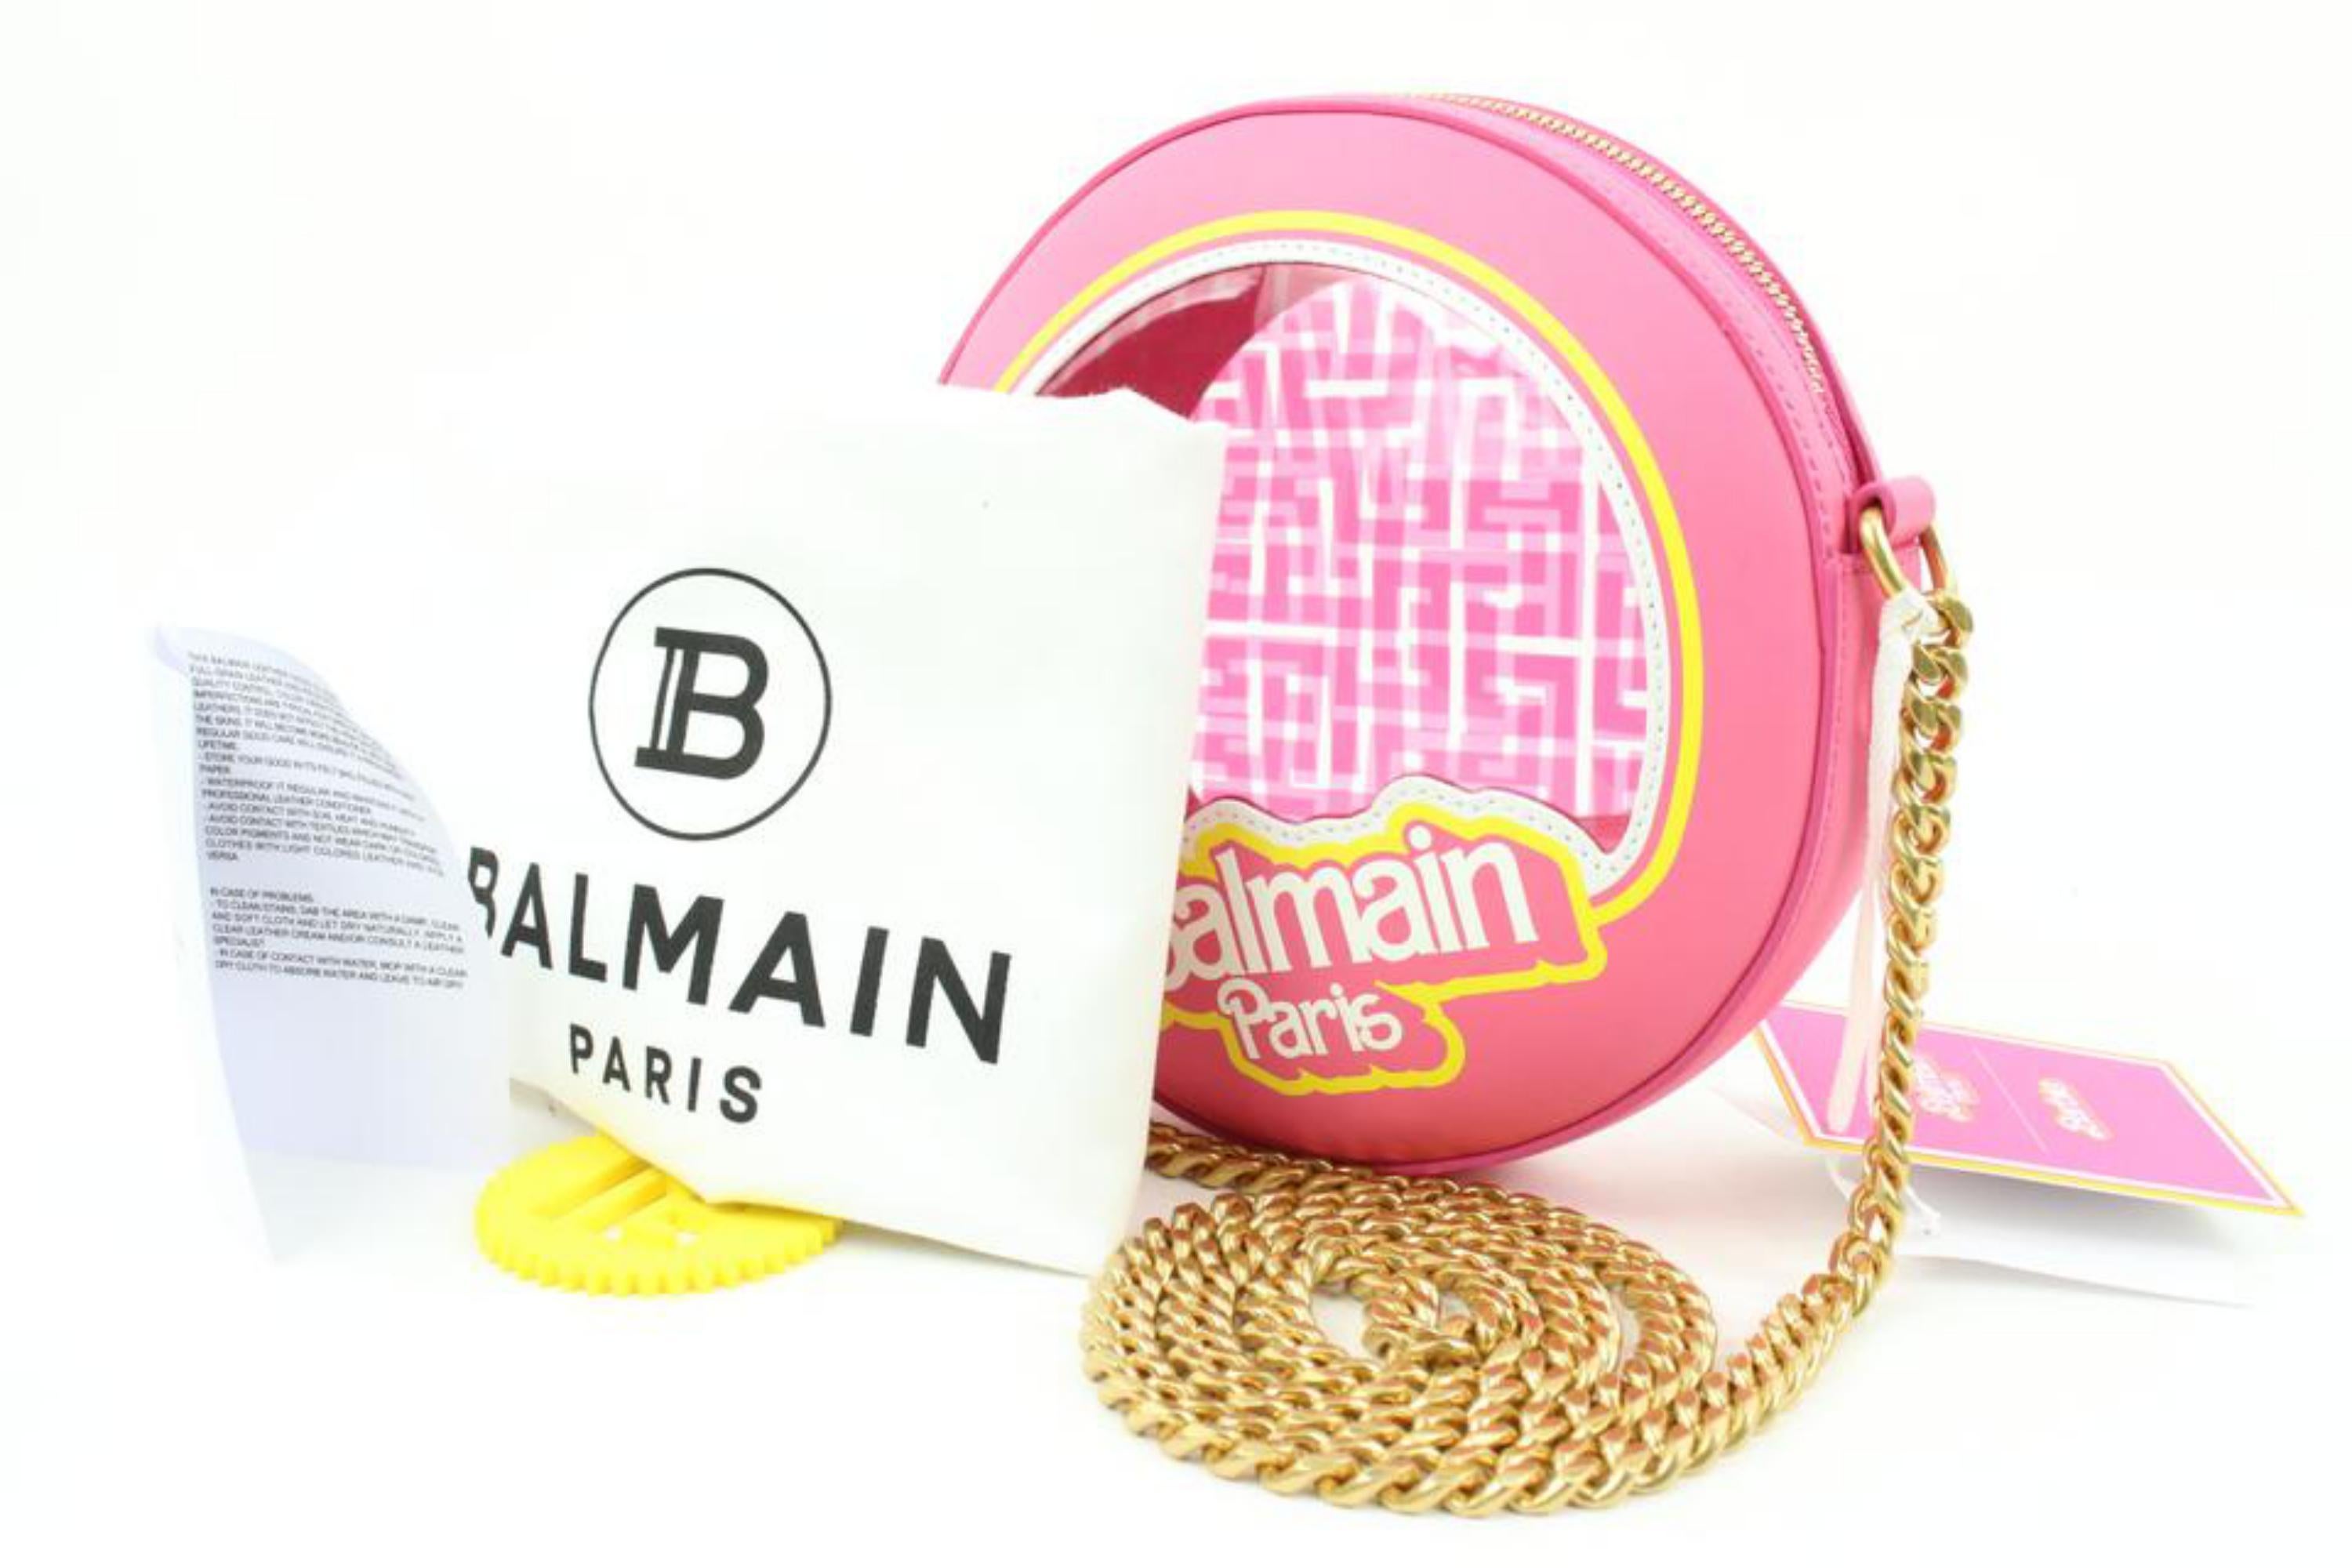 Balmain Barbie Translucent Pink Disco Round  Crossbody Bag  1BM318
Made In: Italy
Measurements: Length:  7.75